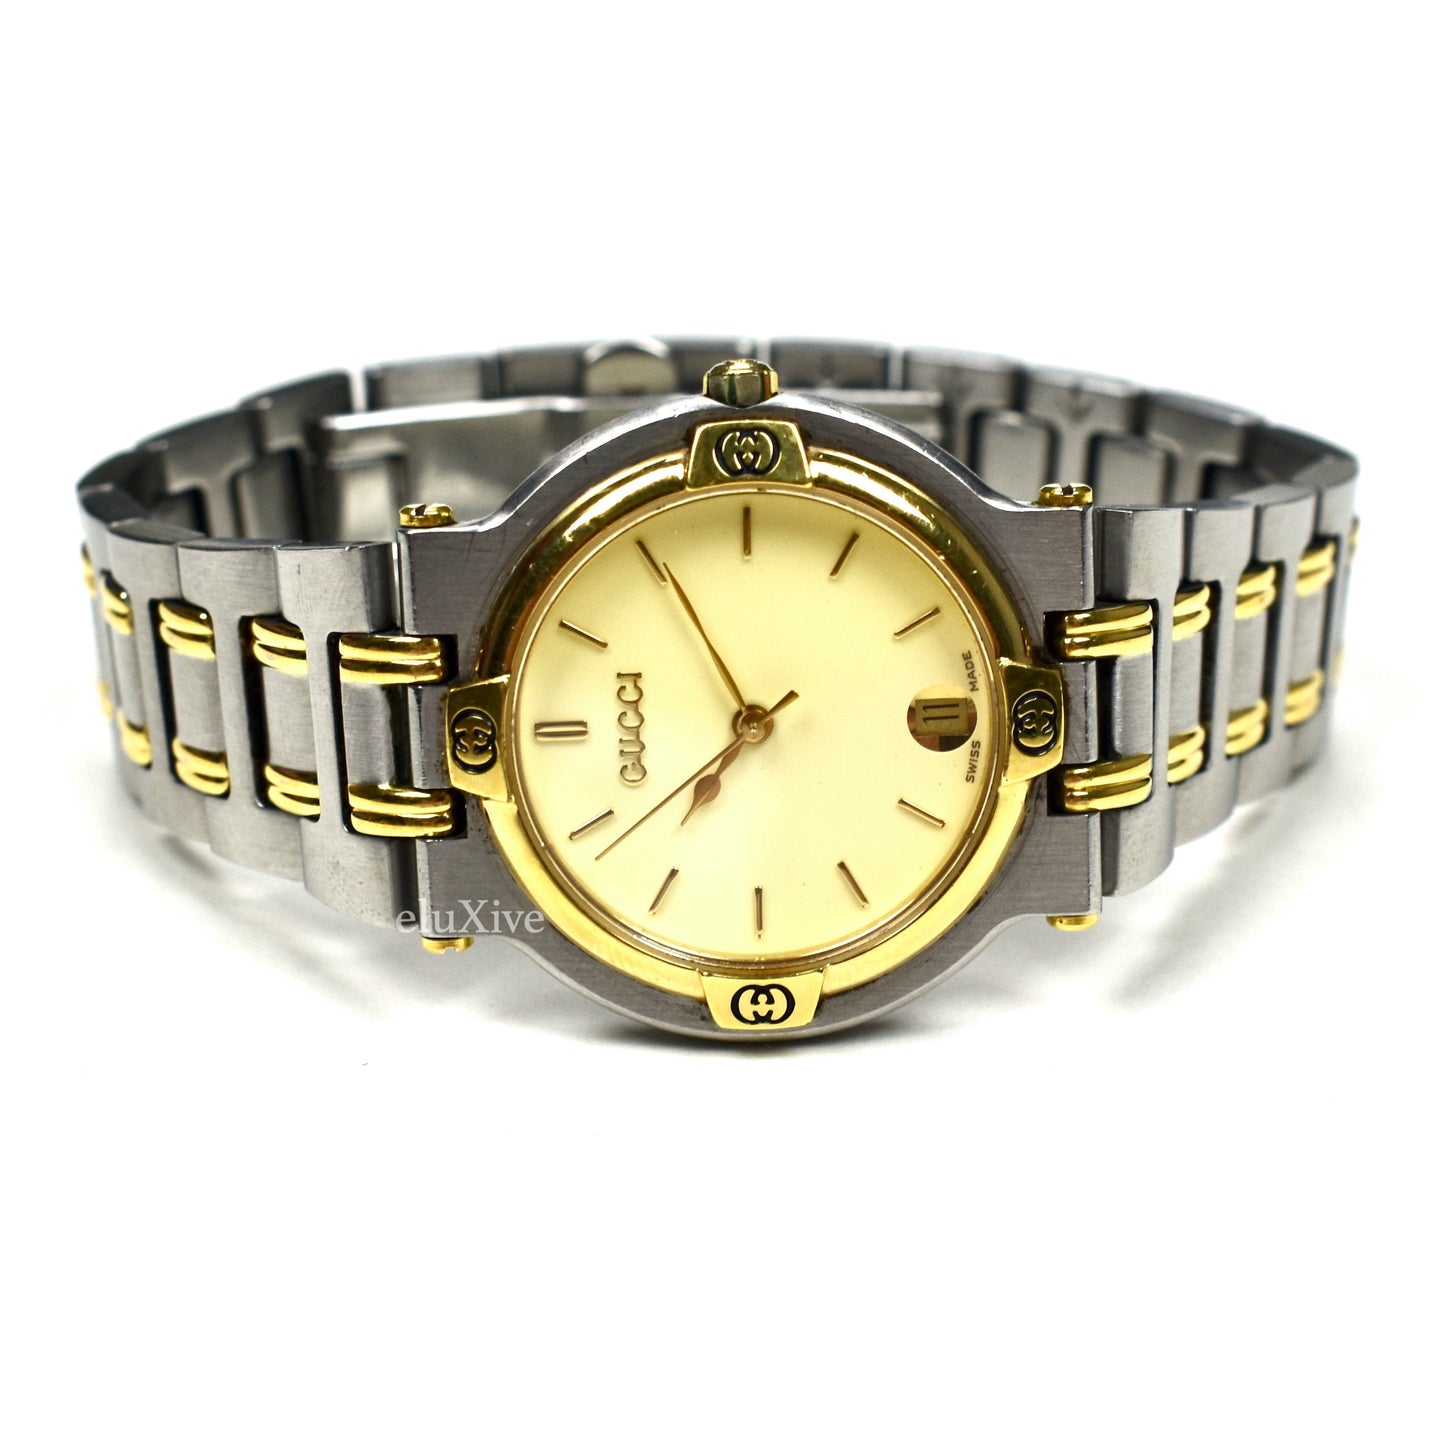 Gucci - 9000M Gold / Steel Cream Dial Watch